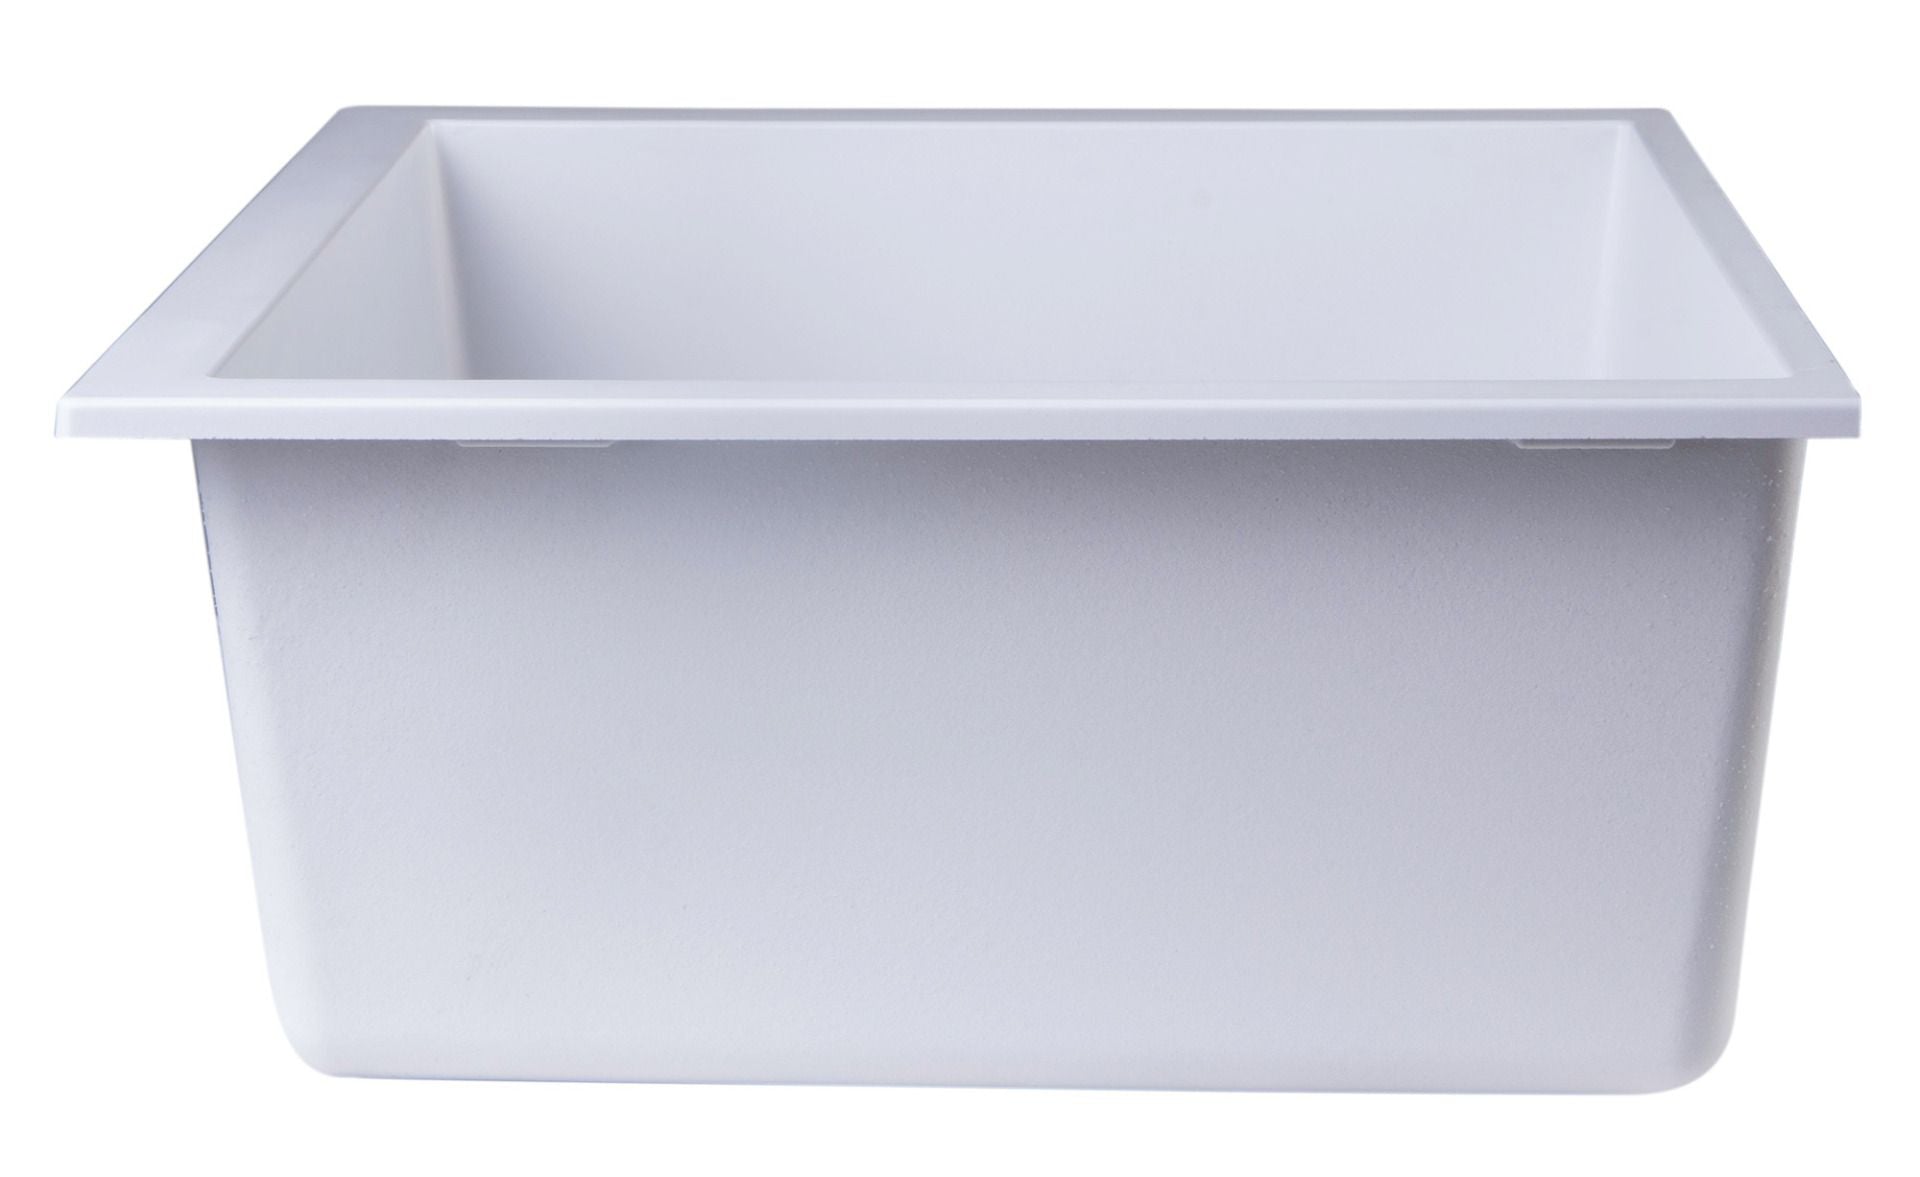 ALFI brand AB2420UM 24" Undermount Single Granite Composite Kitchen Sink in white